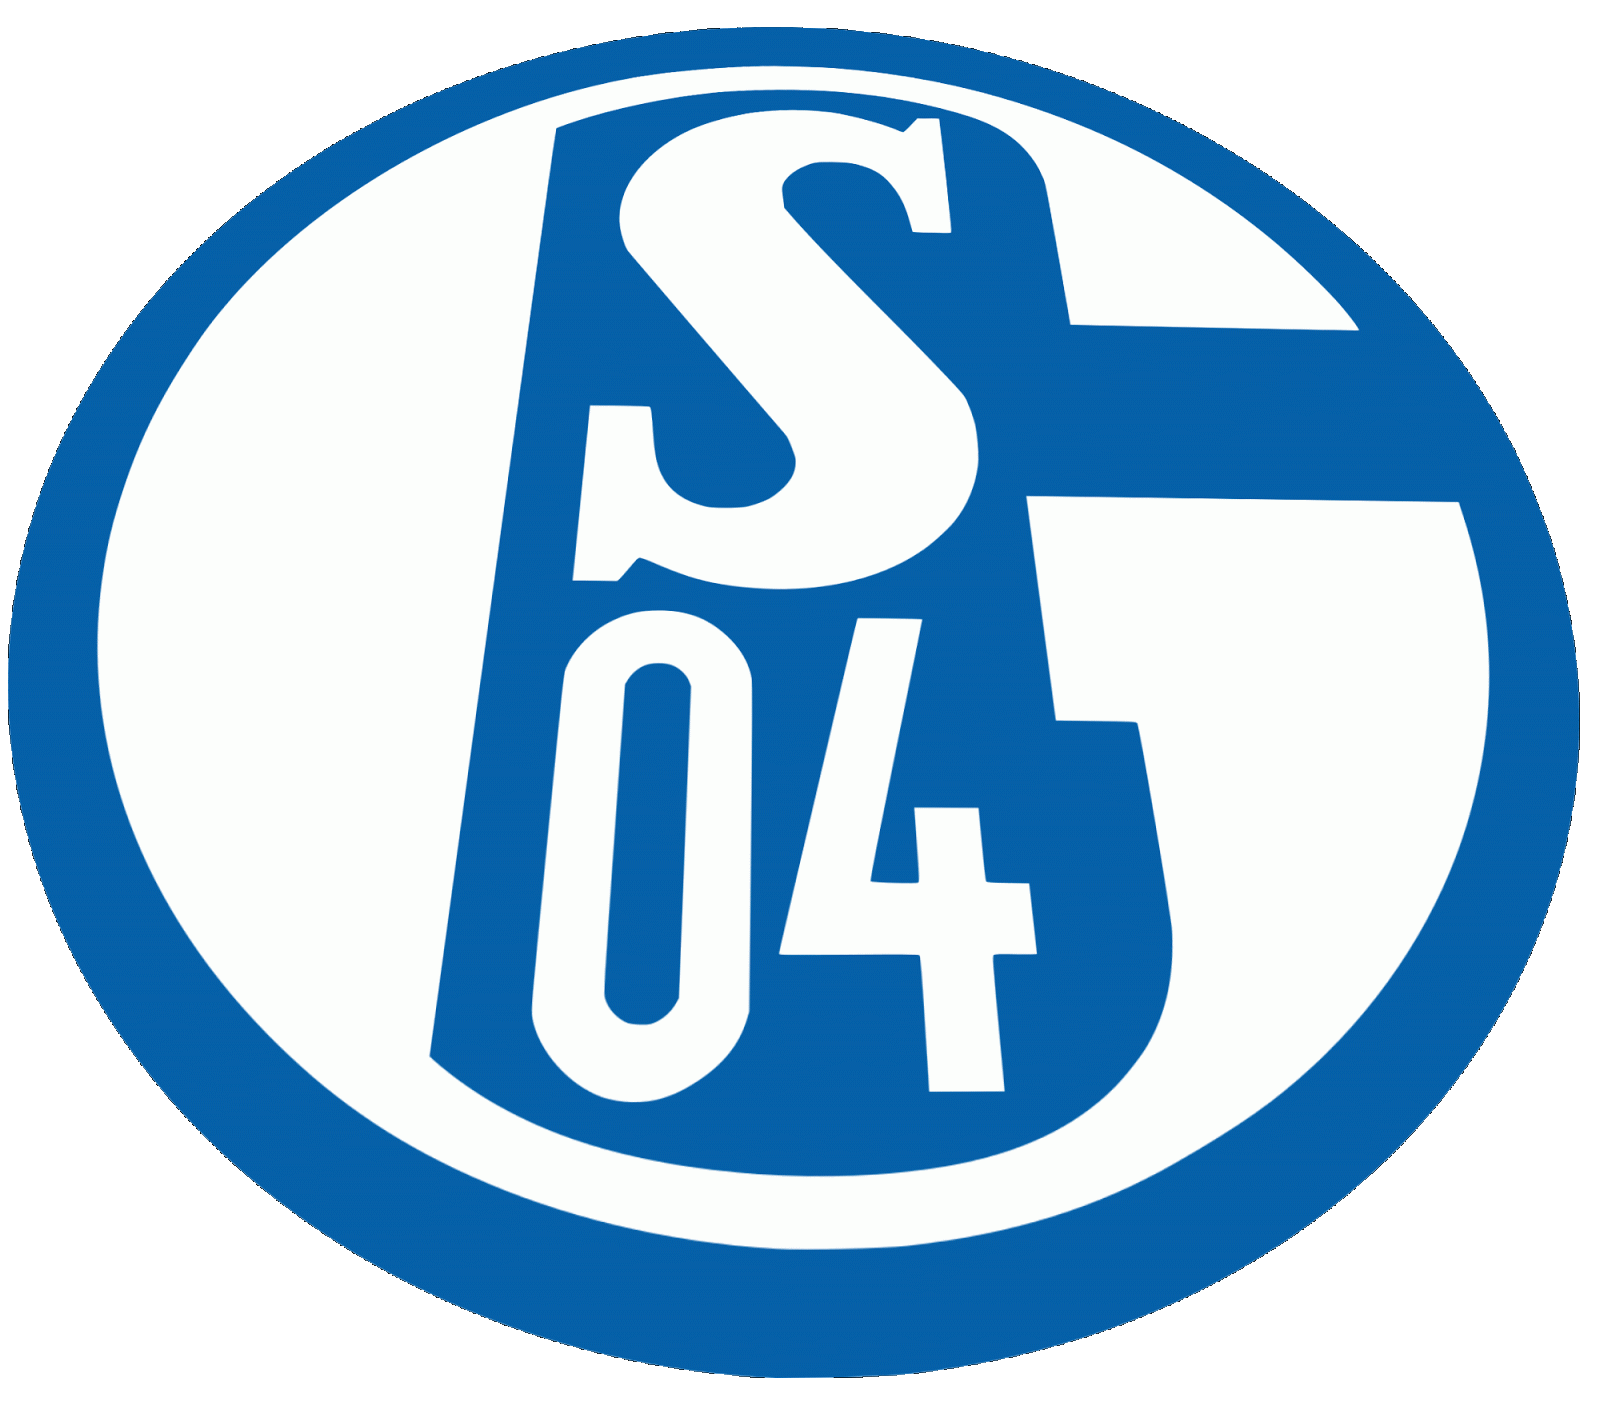 Escut del FC Schalke 04